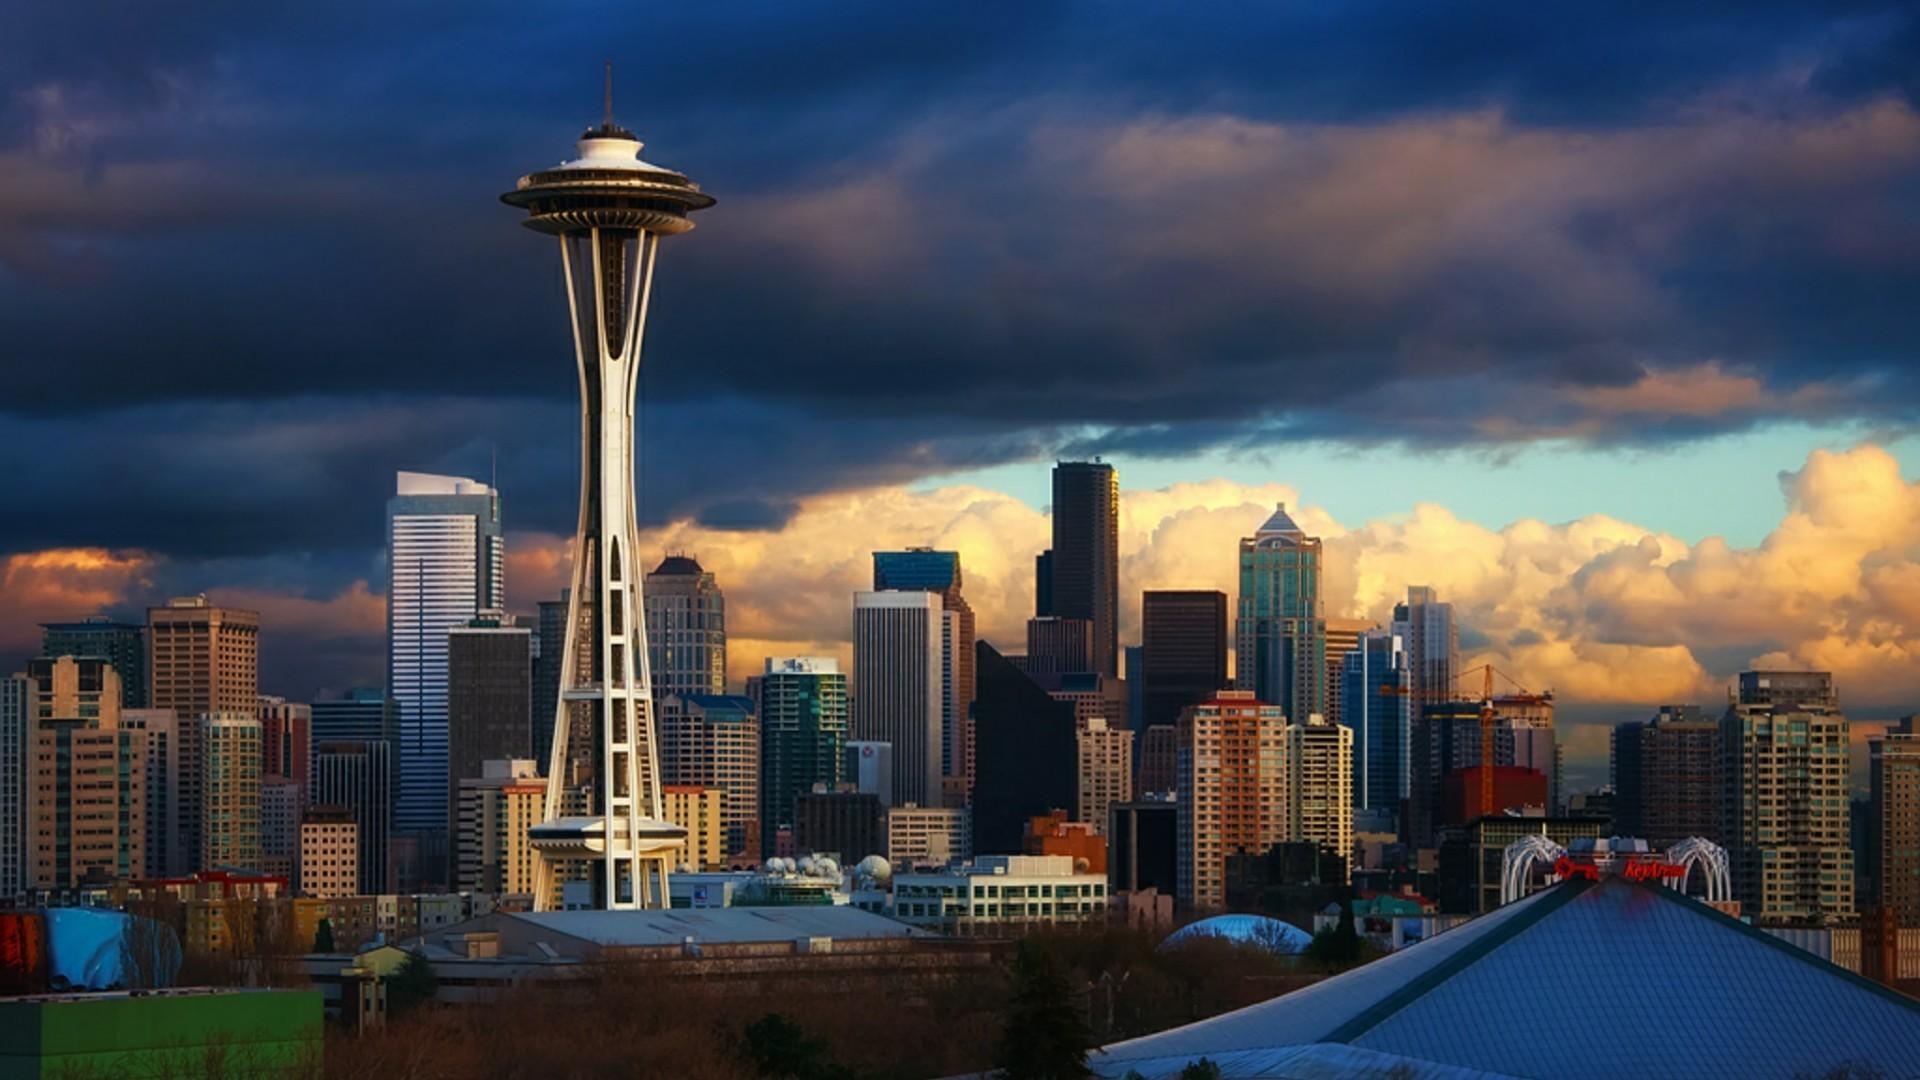  Seattle  HD Wallpapers  Top Free Seattle  HD Backgrounds  